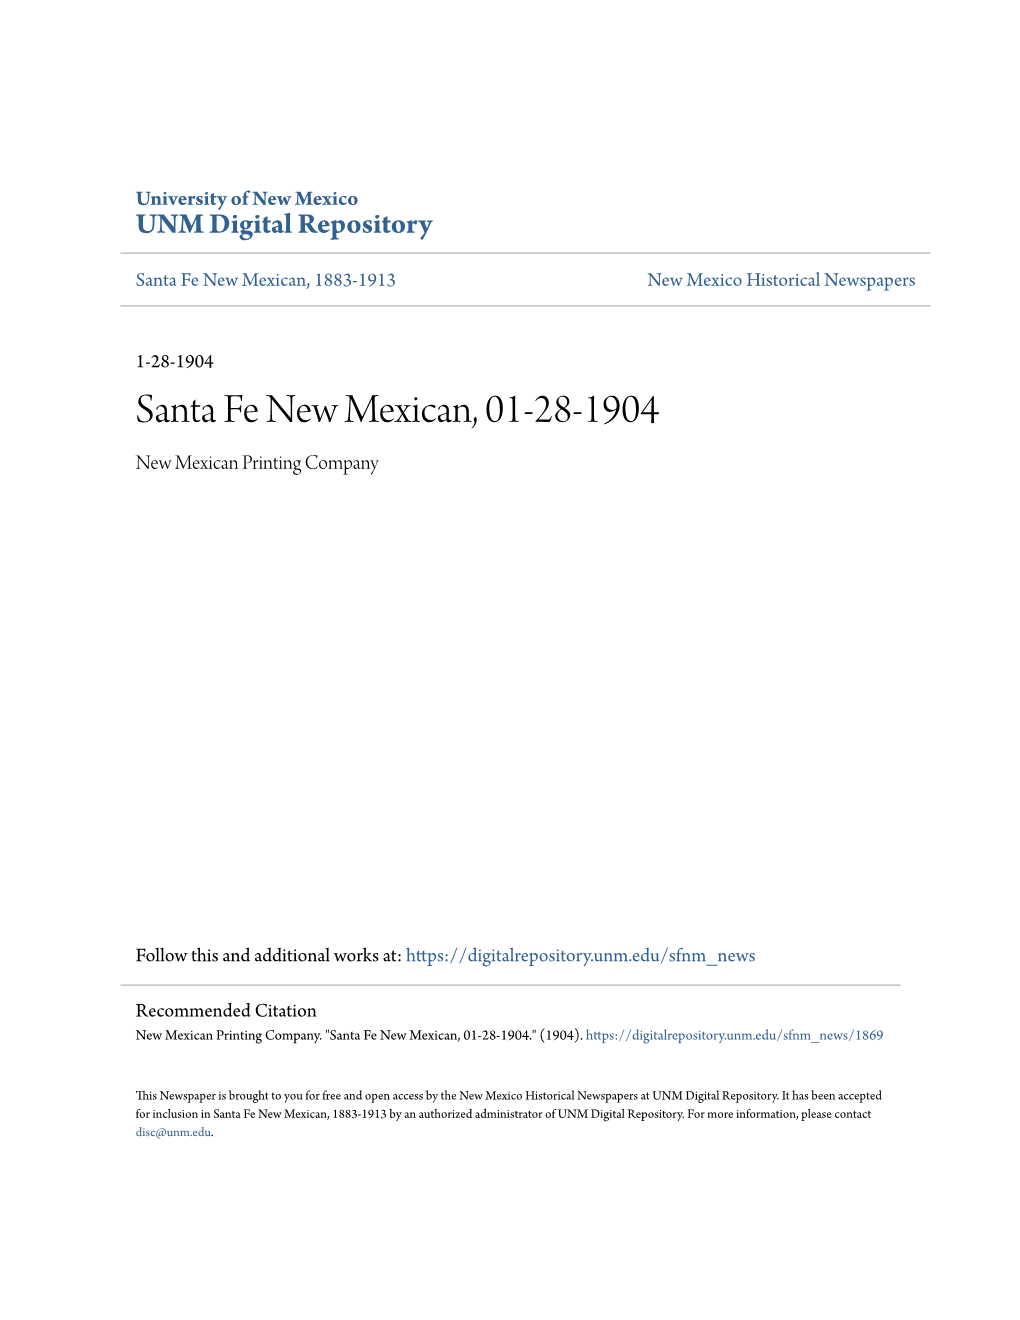 Santa Fe New Mexican, 01-28-1904 New Mexican Printing Company